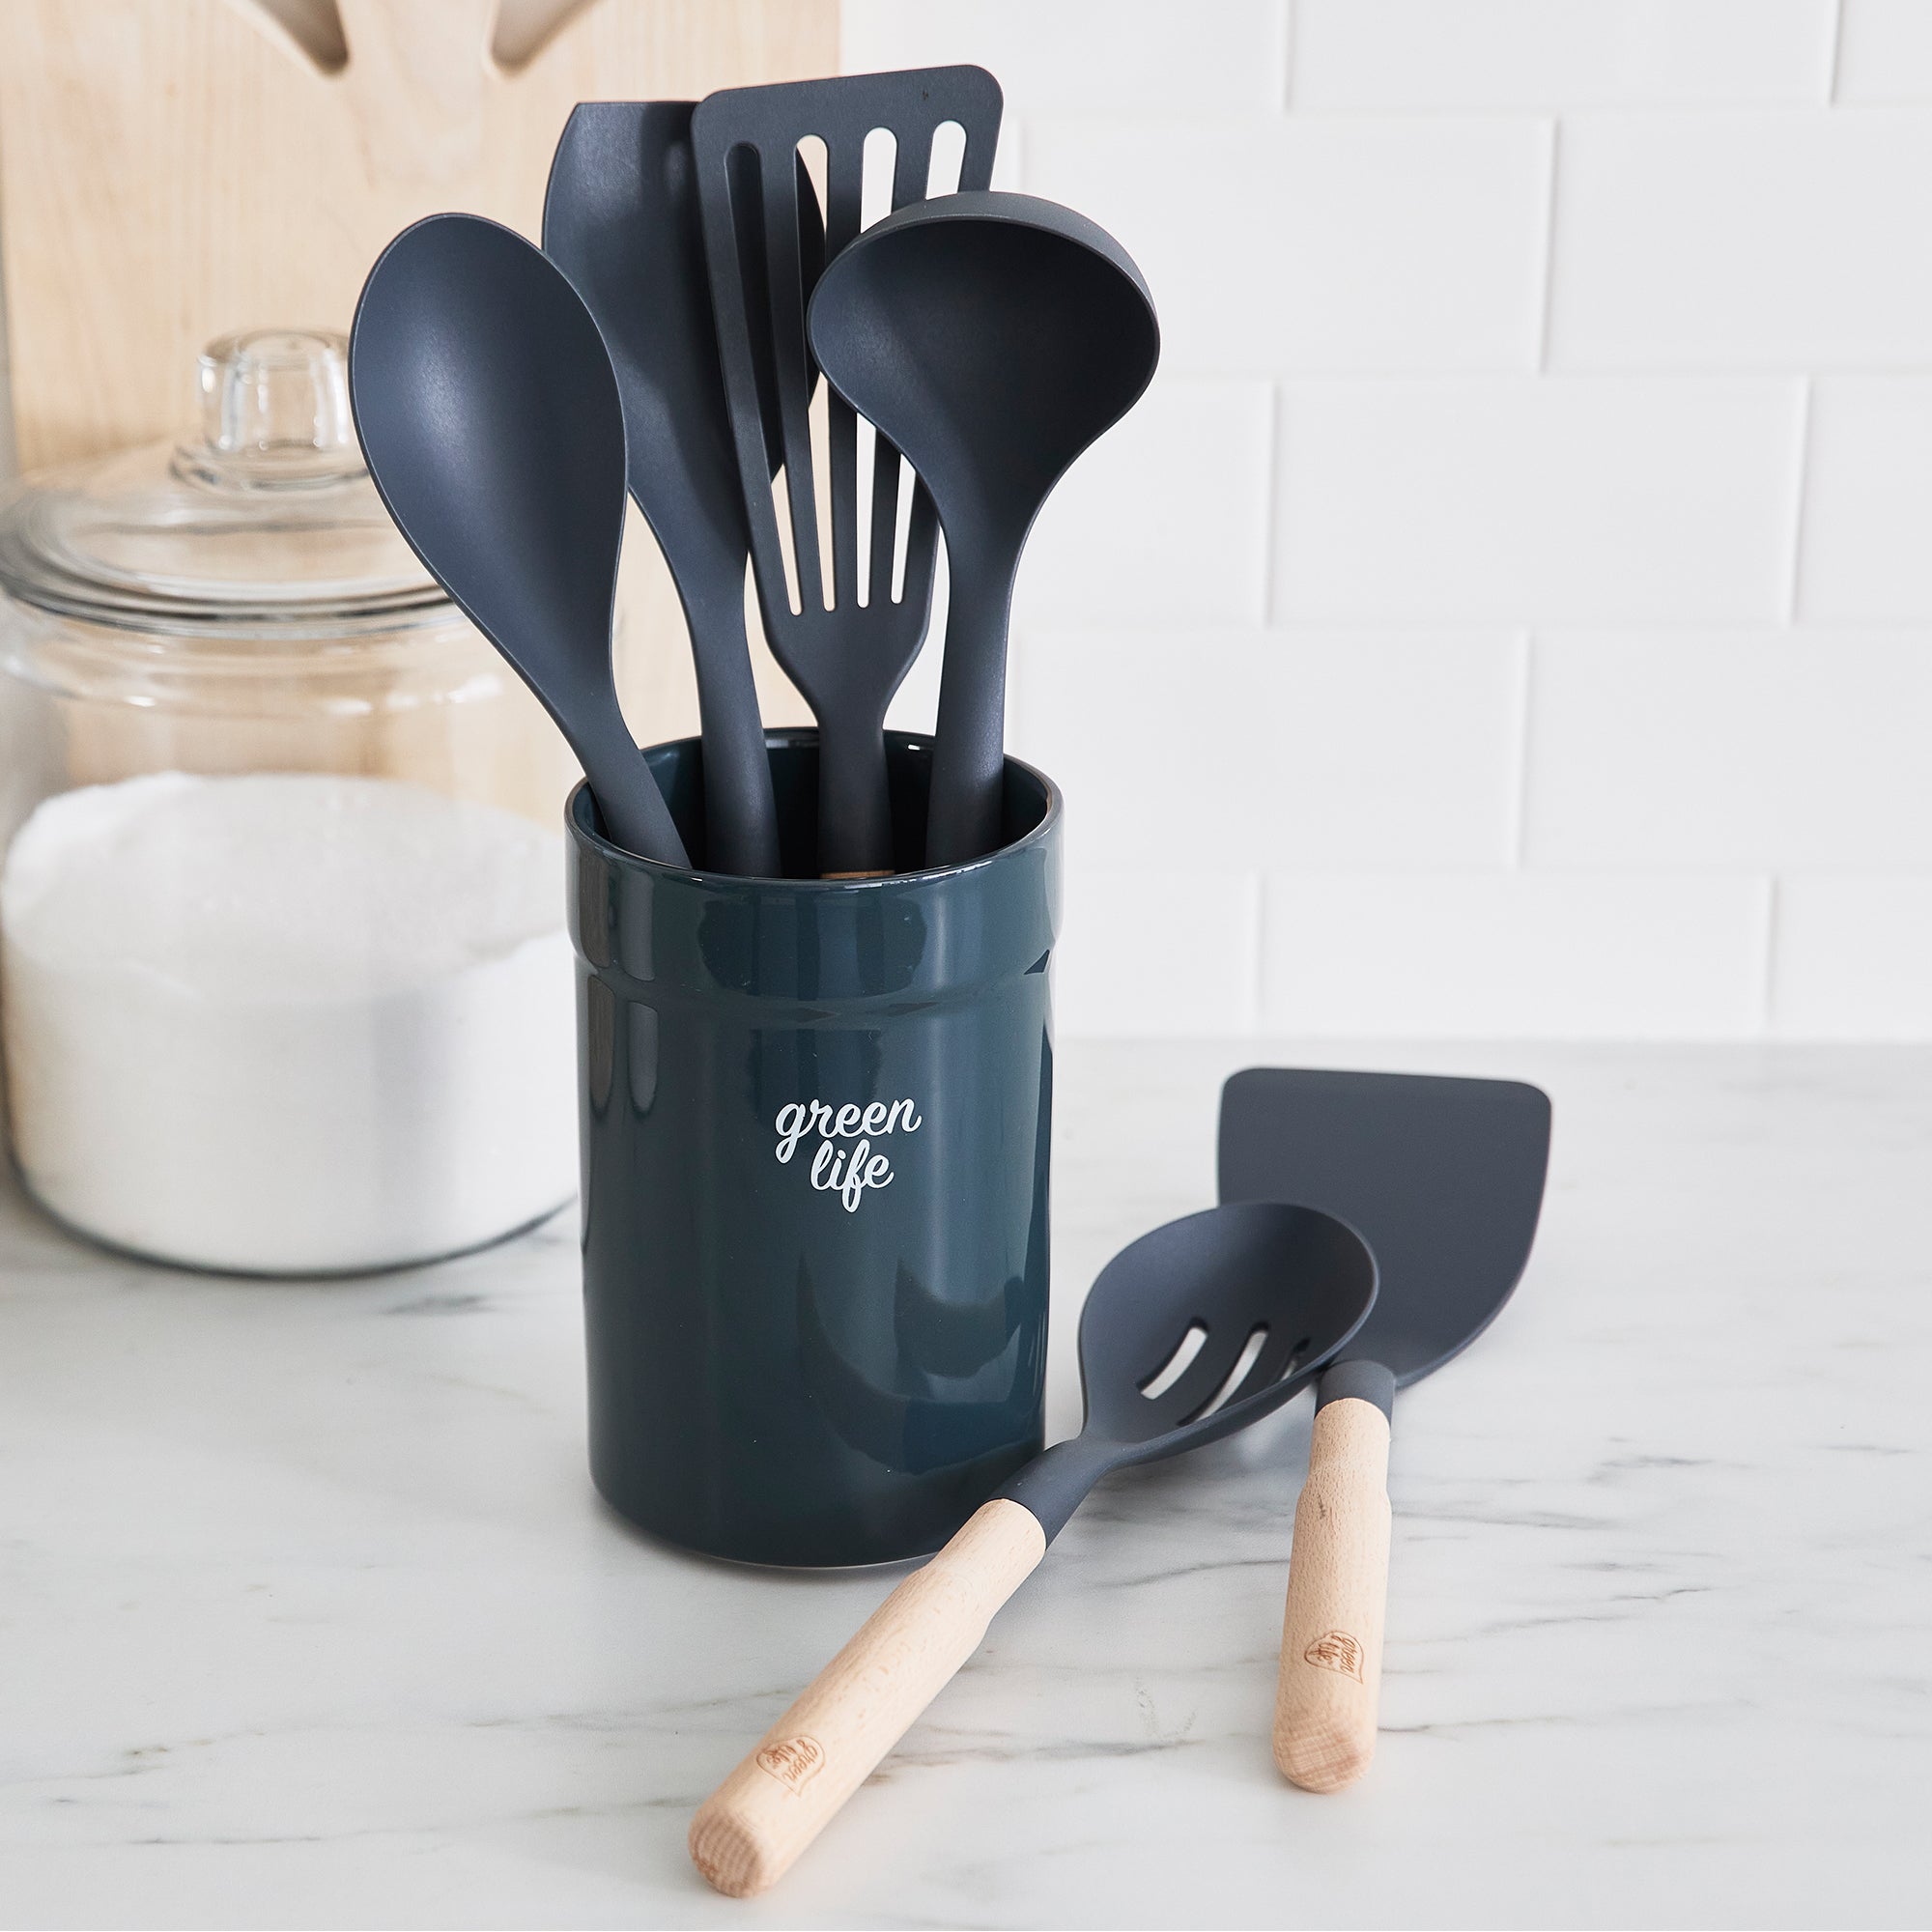 GreenLife Nylon & Wood Cooking Utensils with Ceramic Crock, 7-Piece Set | Black